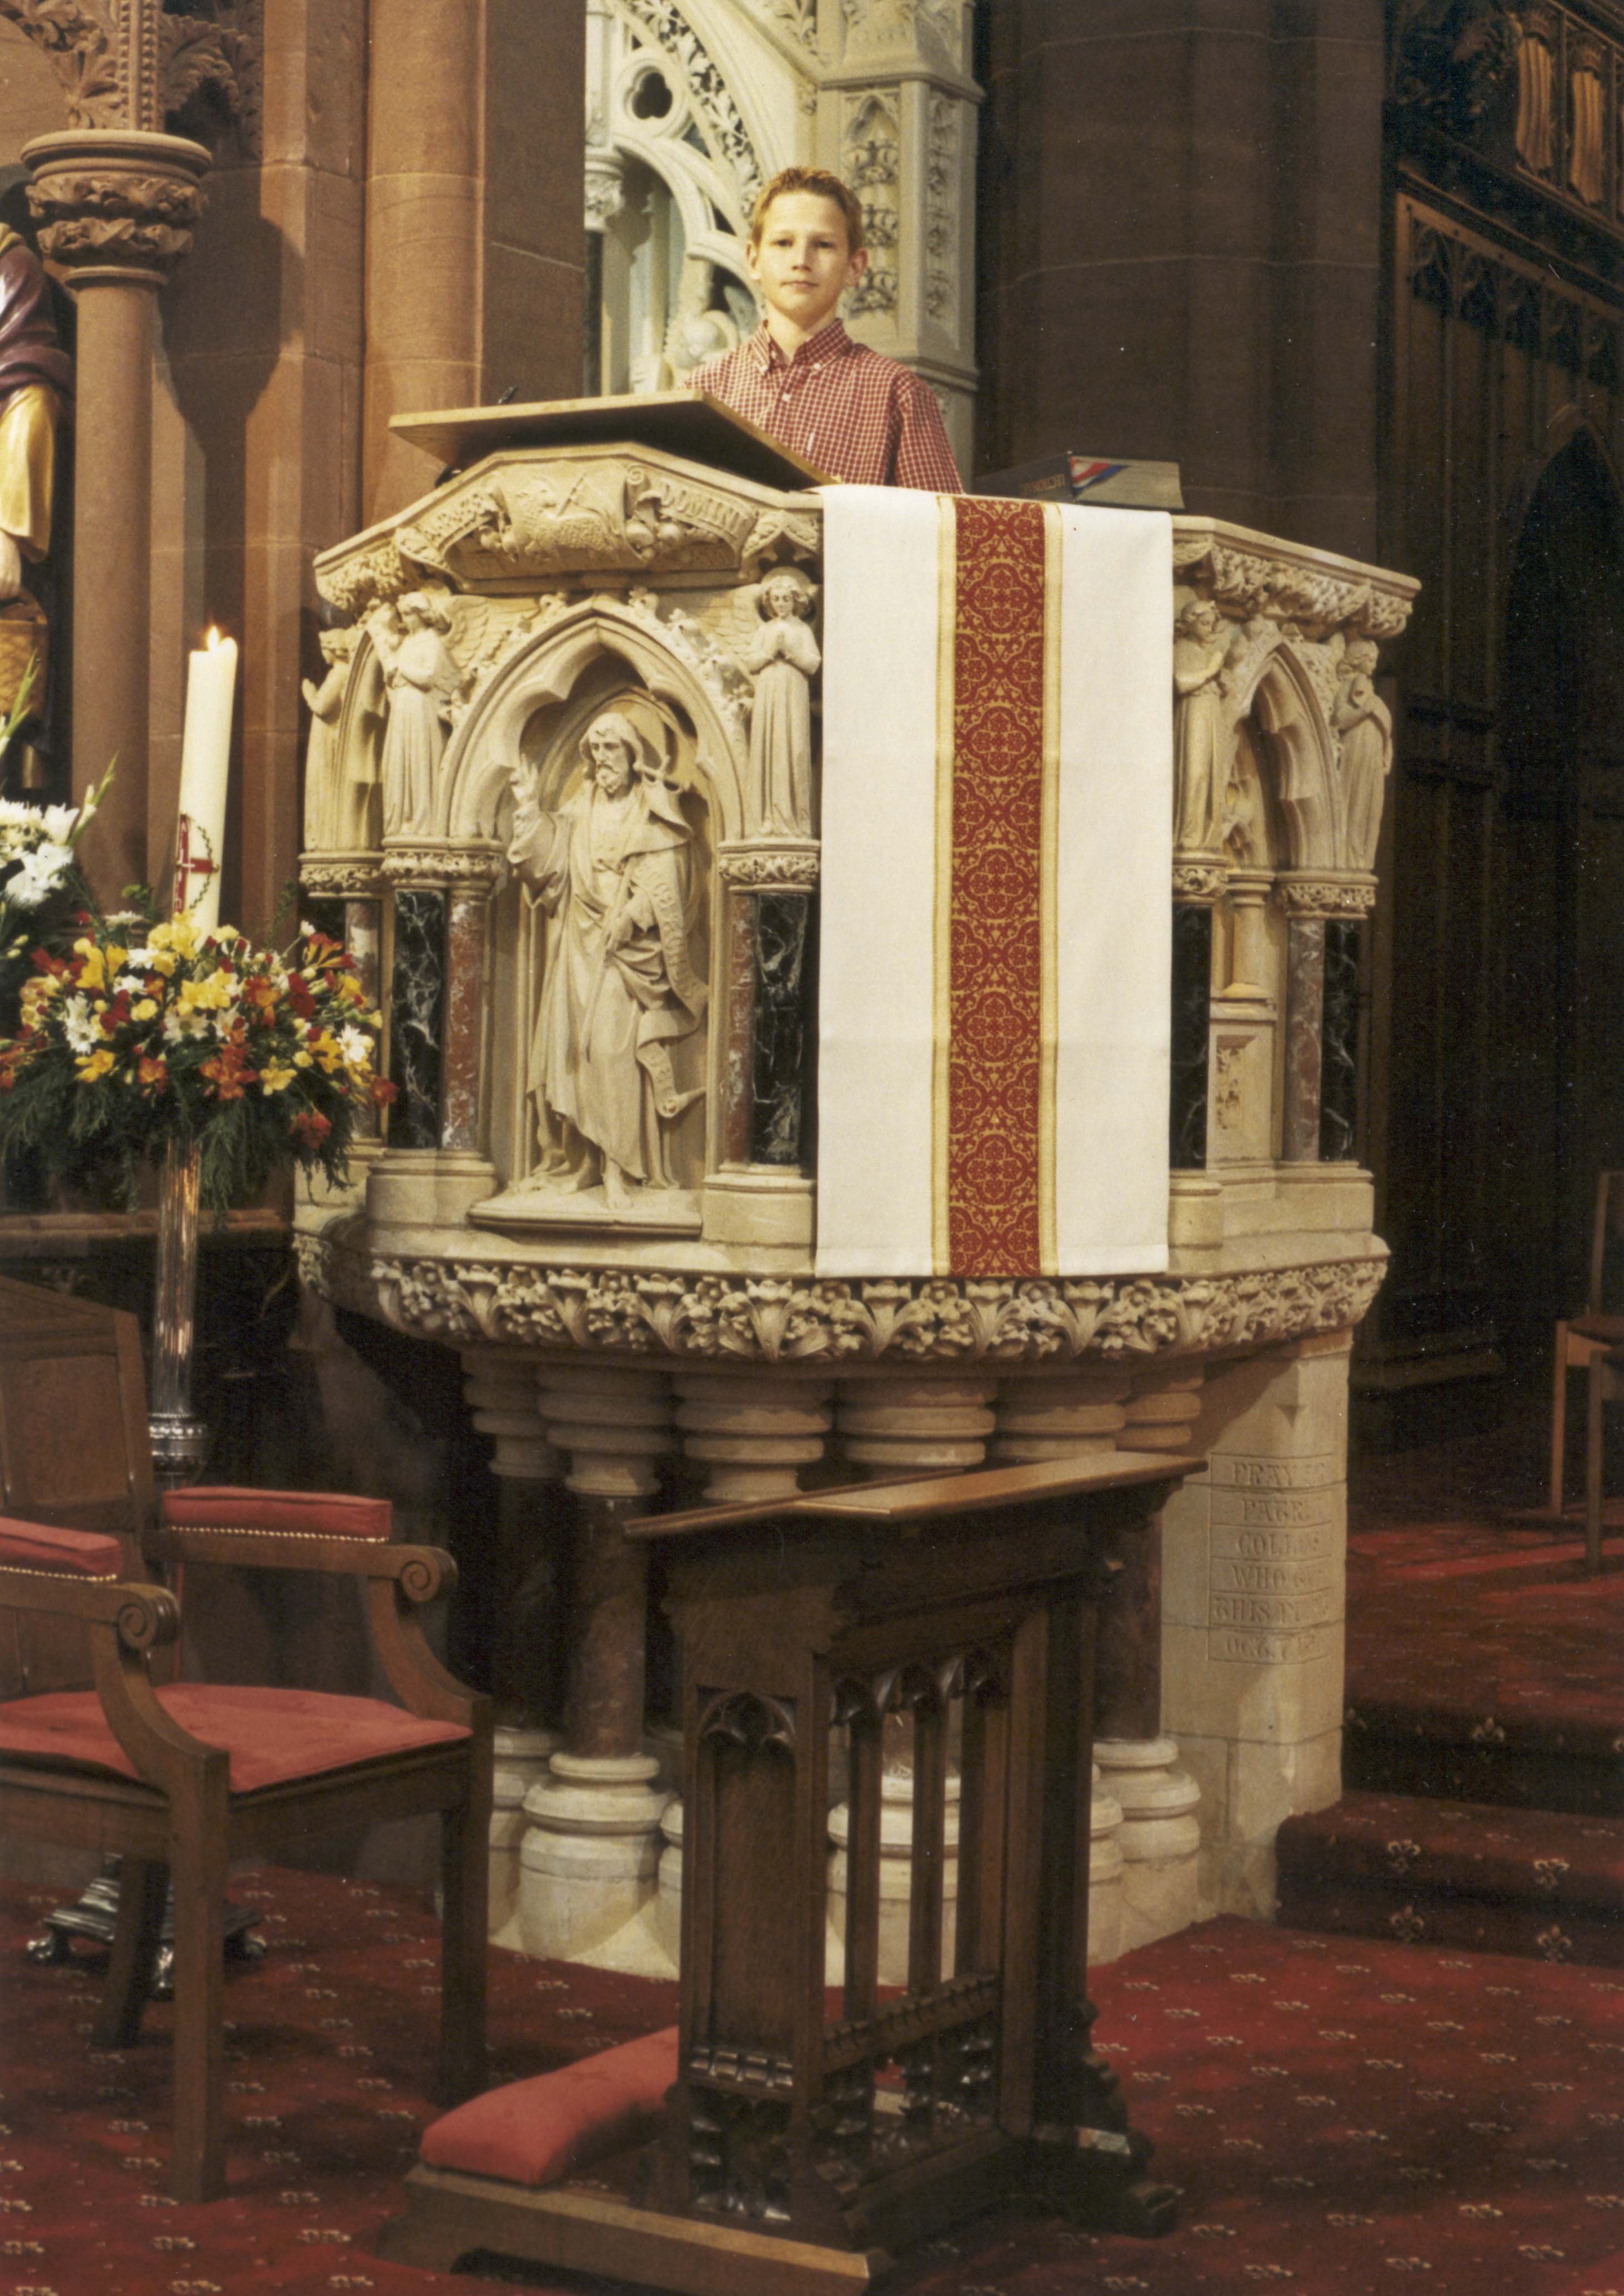 Rededication Mass